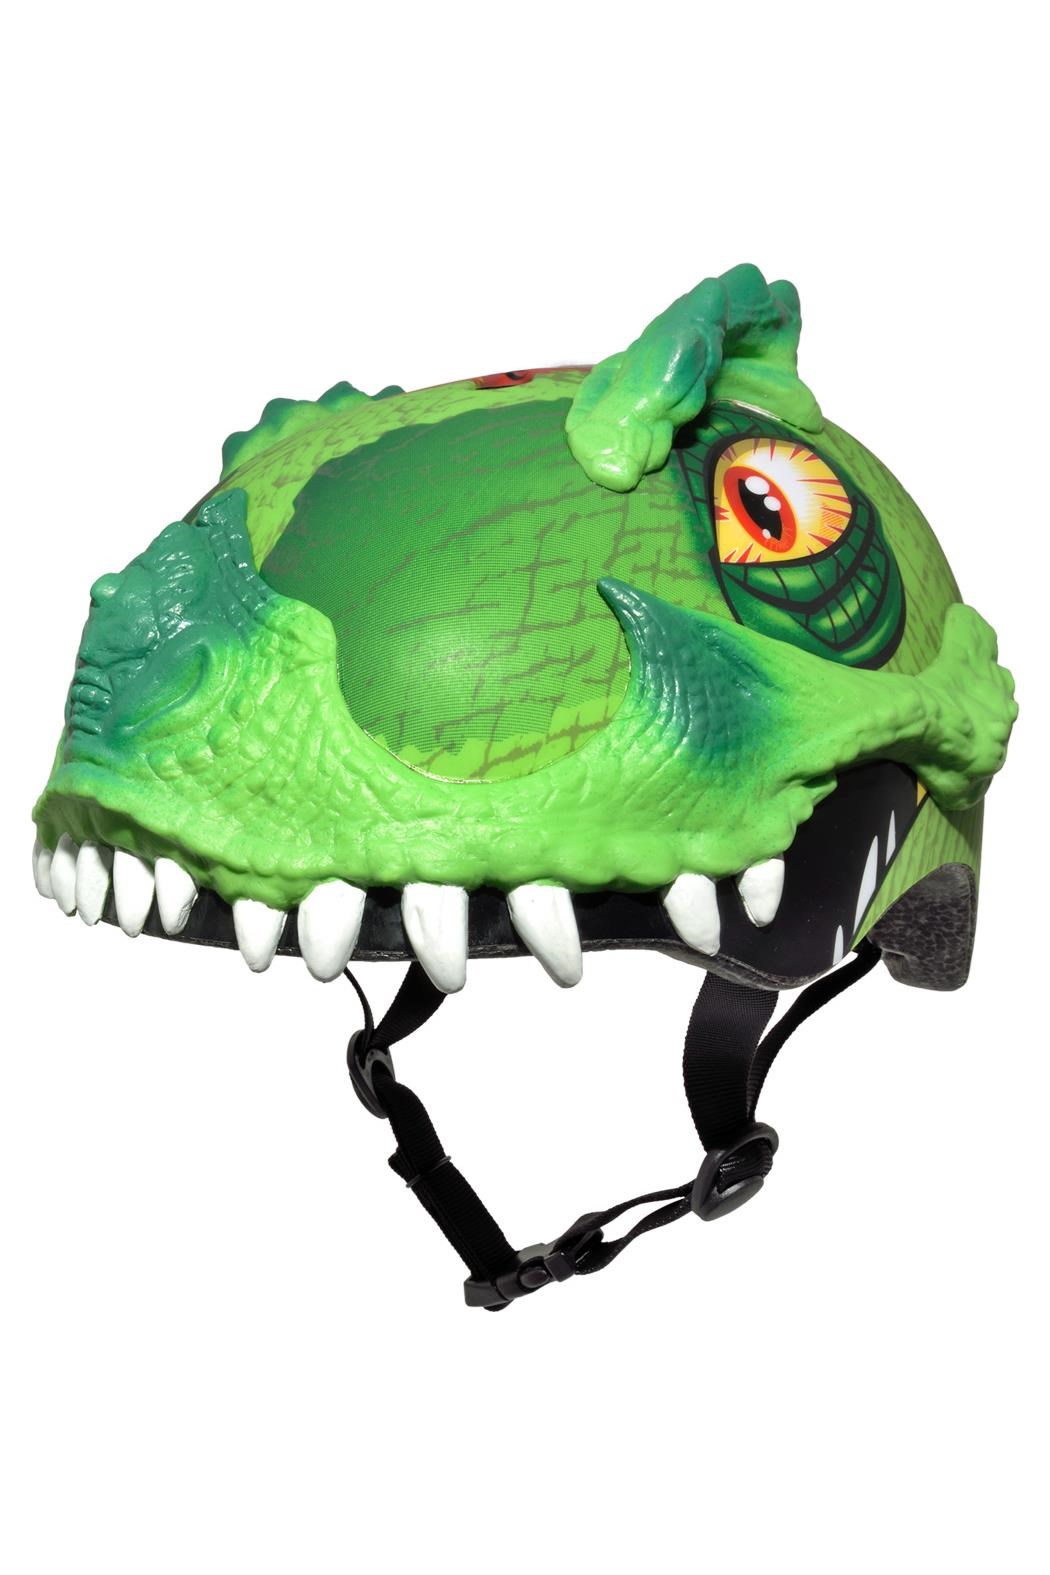 T-Rex Awesome Raskullz Child Helmet (5+ Years) -